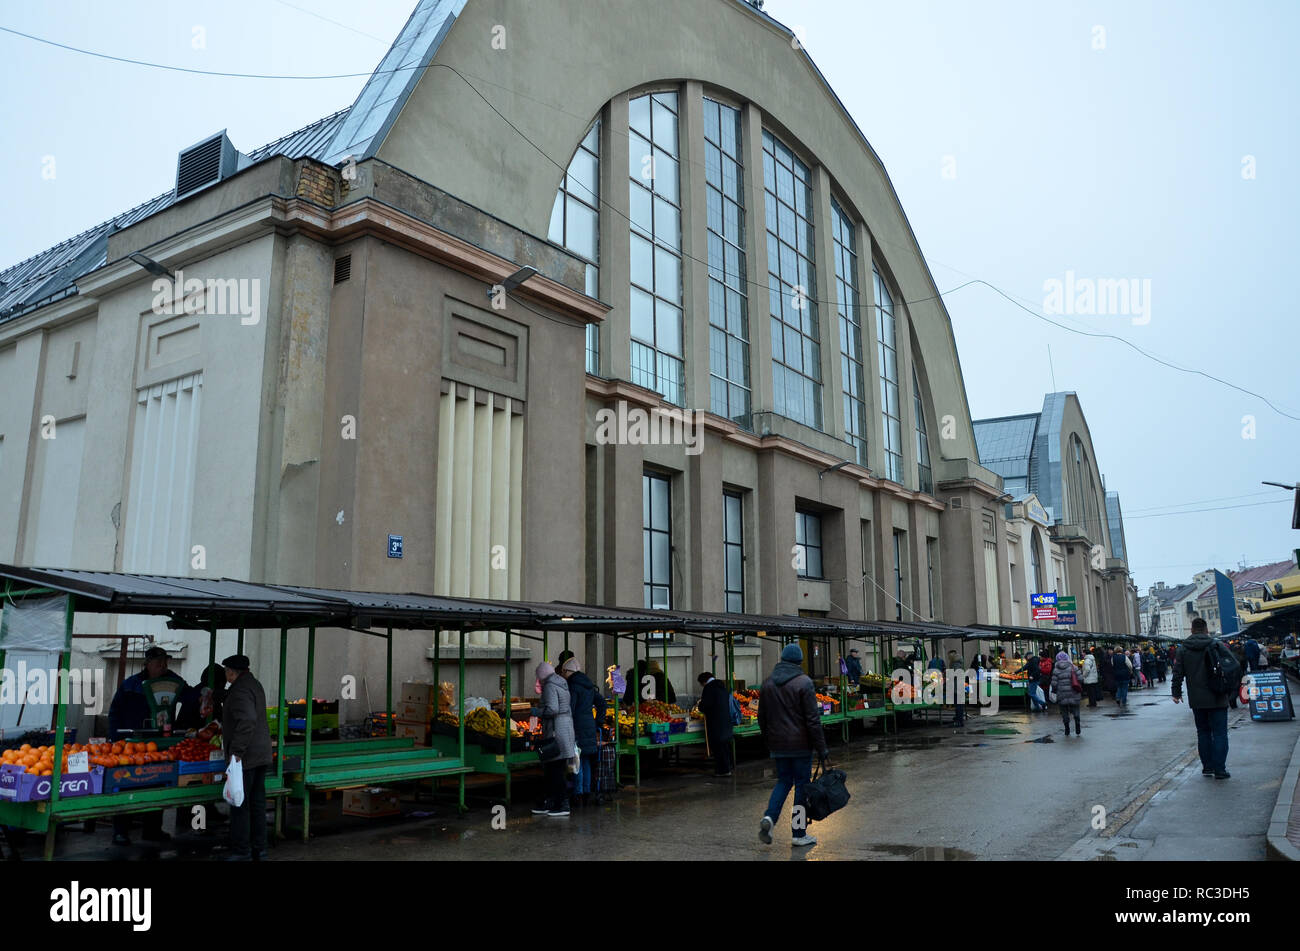 The exterior of Riga Central Market (Rīgas Centrāltirgus), Europe's largest market and bazaar, Riga, Republic of Latvia, Baltics, December 2018 Stock Photo